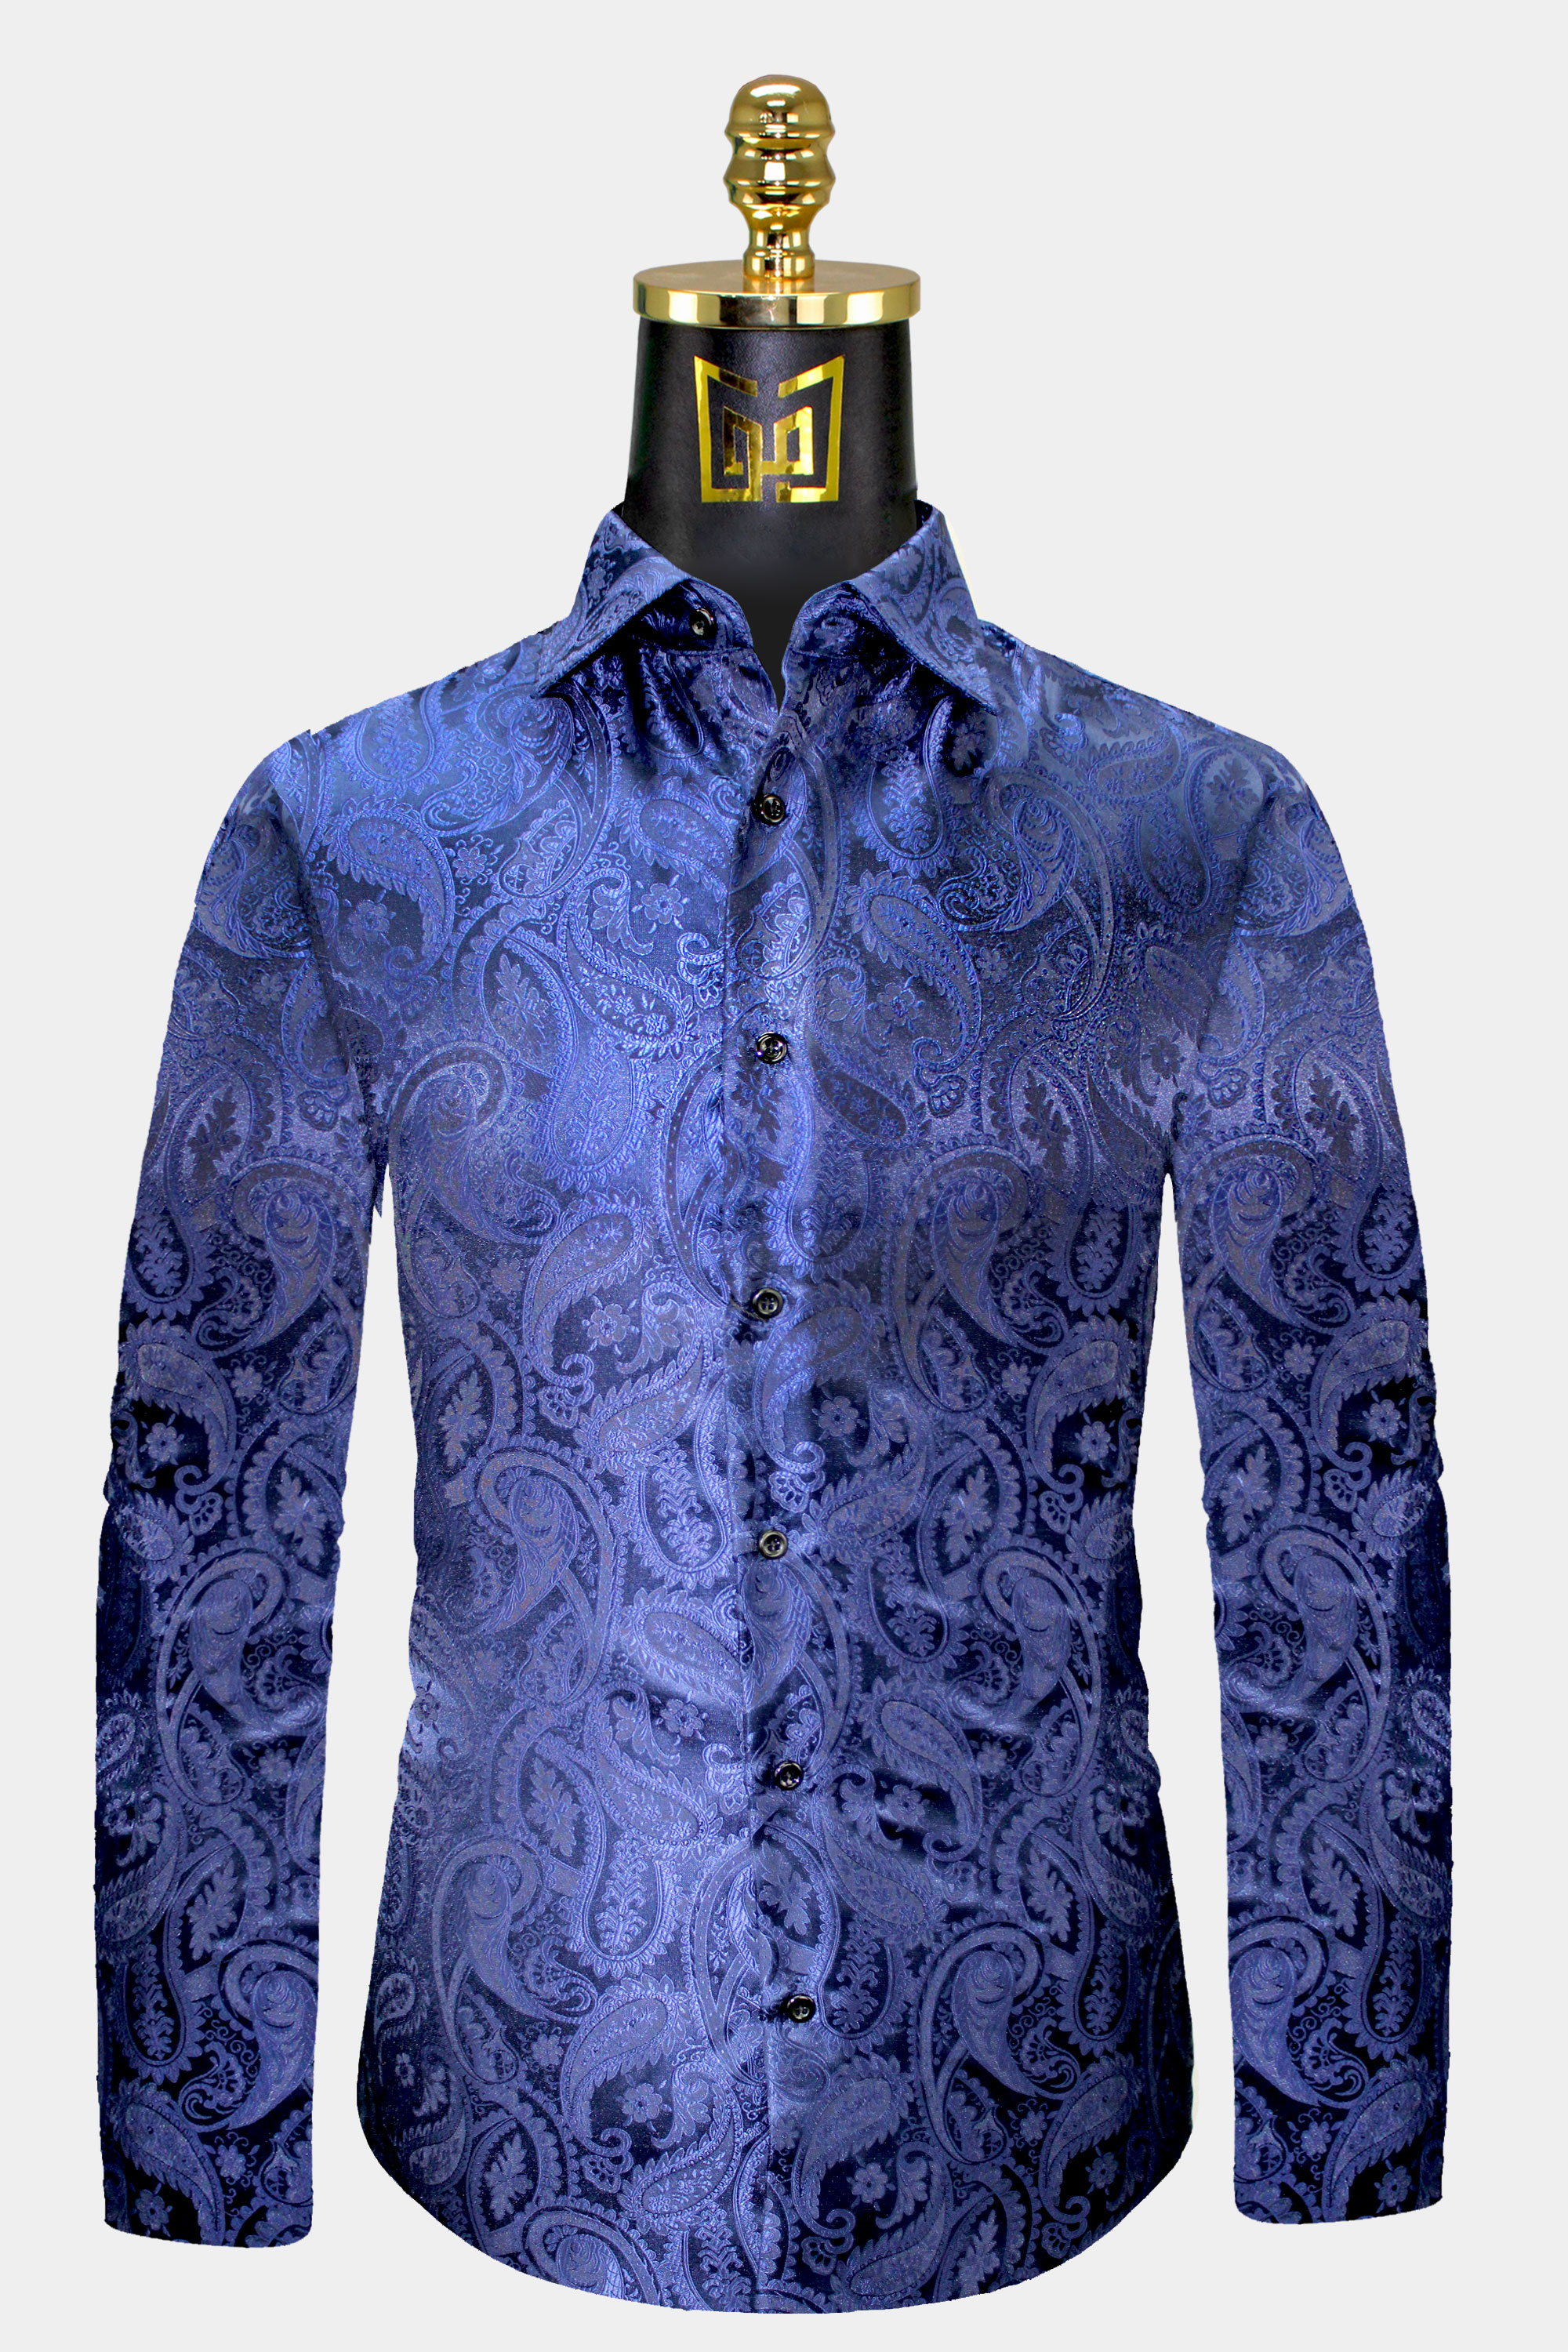 Mens-Navy-Blue-Paisley-Shirt-Patterned-Floral-Dress-Shirt-For-Men-from-Gentlemansguru.com